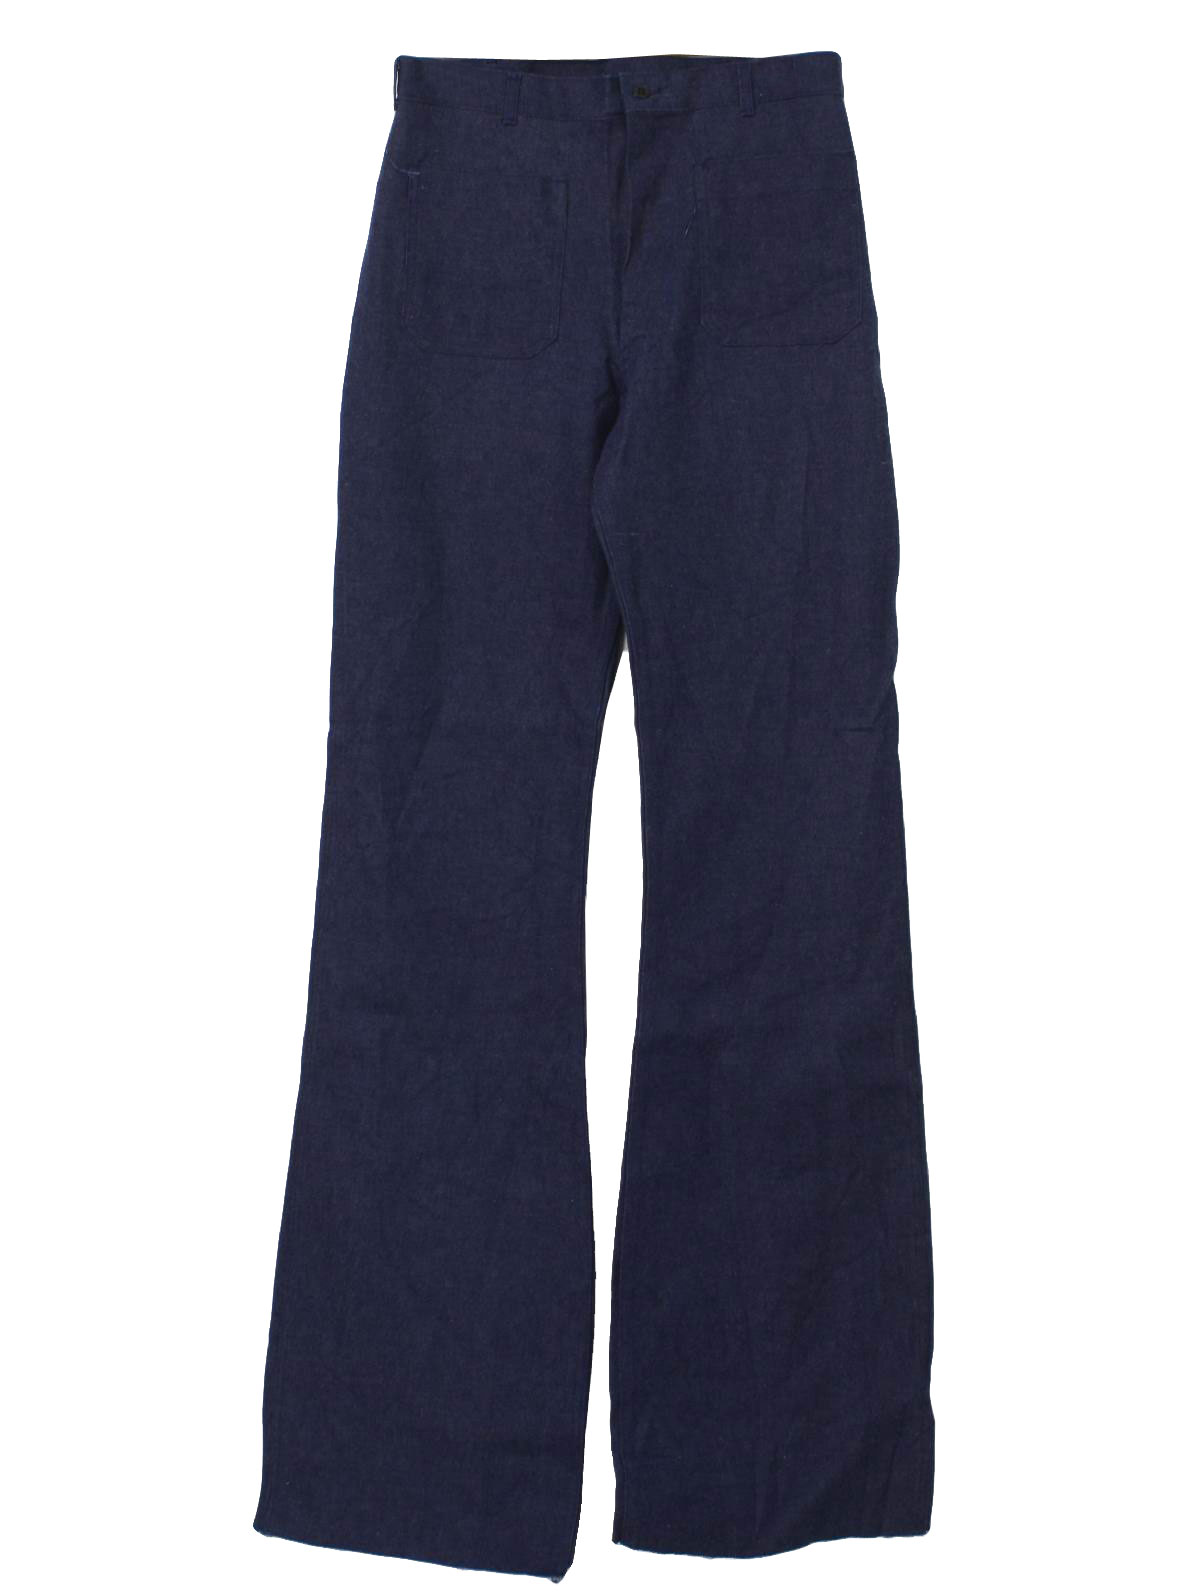 Vintage Utility Trousers Seventies Bellbottom Pants: 70s -Utility